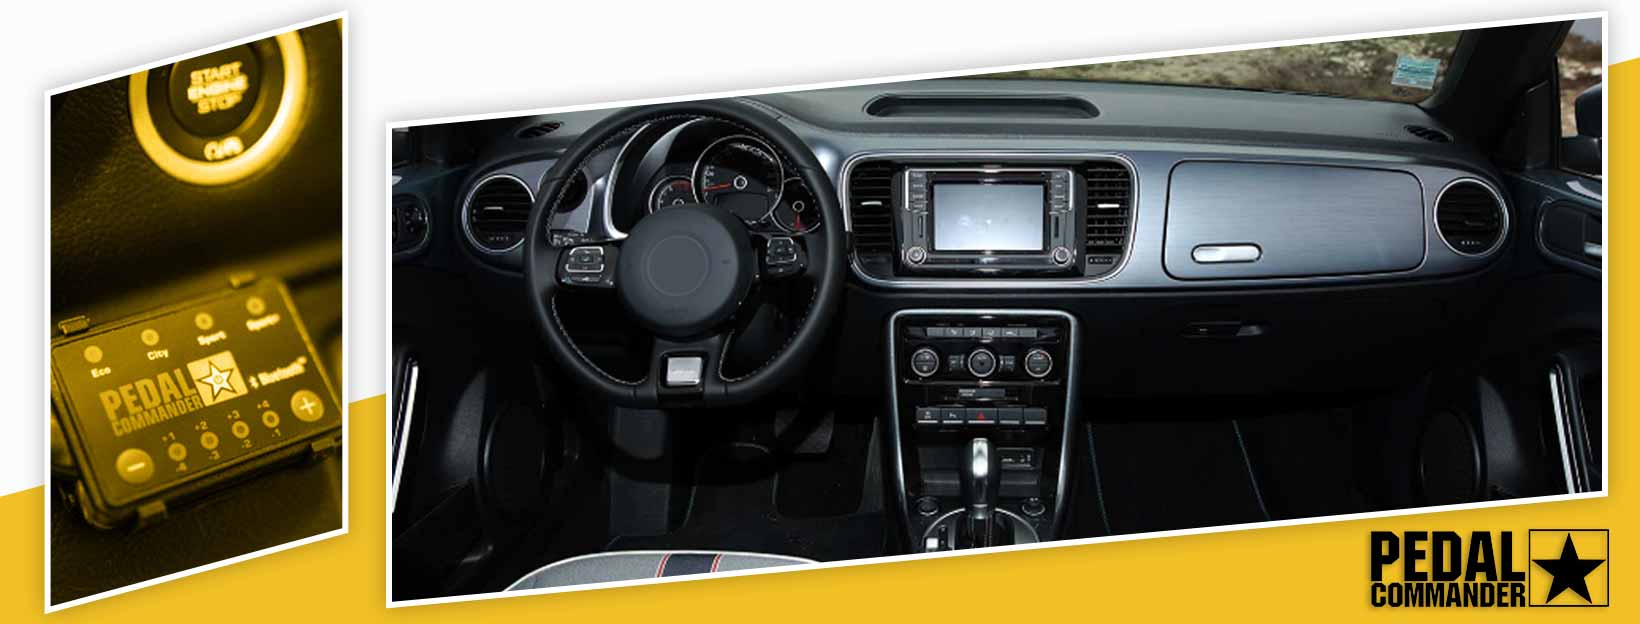 Pedal Commander for Volkswagen Beetle - interior